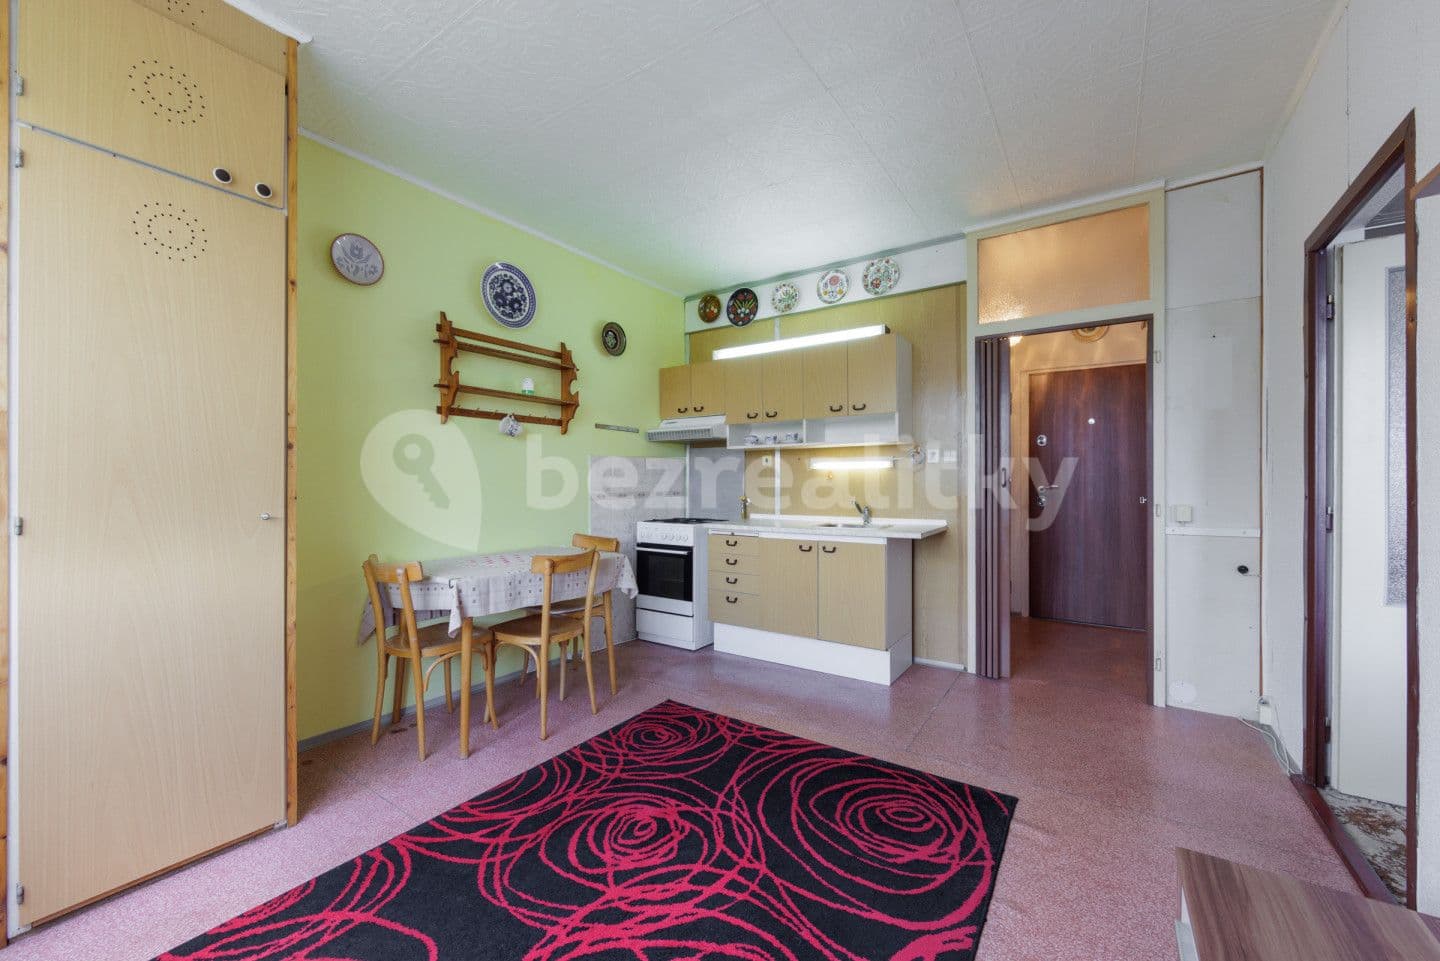 1 bedroom flat for sale, 40 m², Sídliště, Rotava, Karlovarský Region